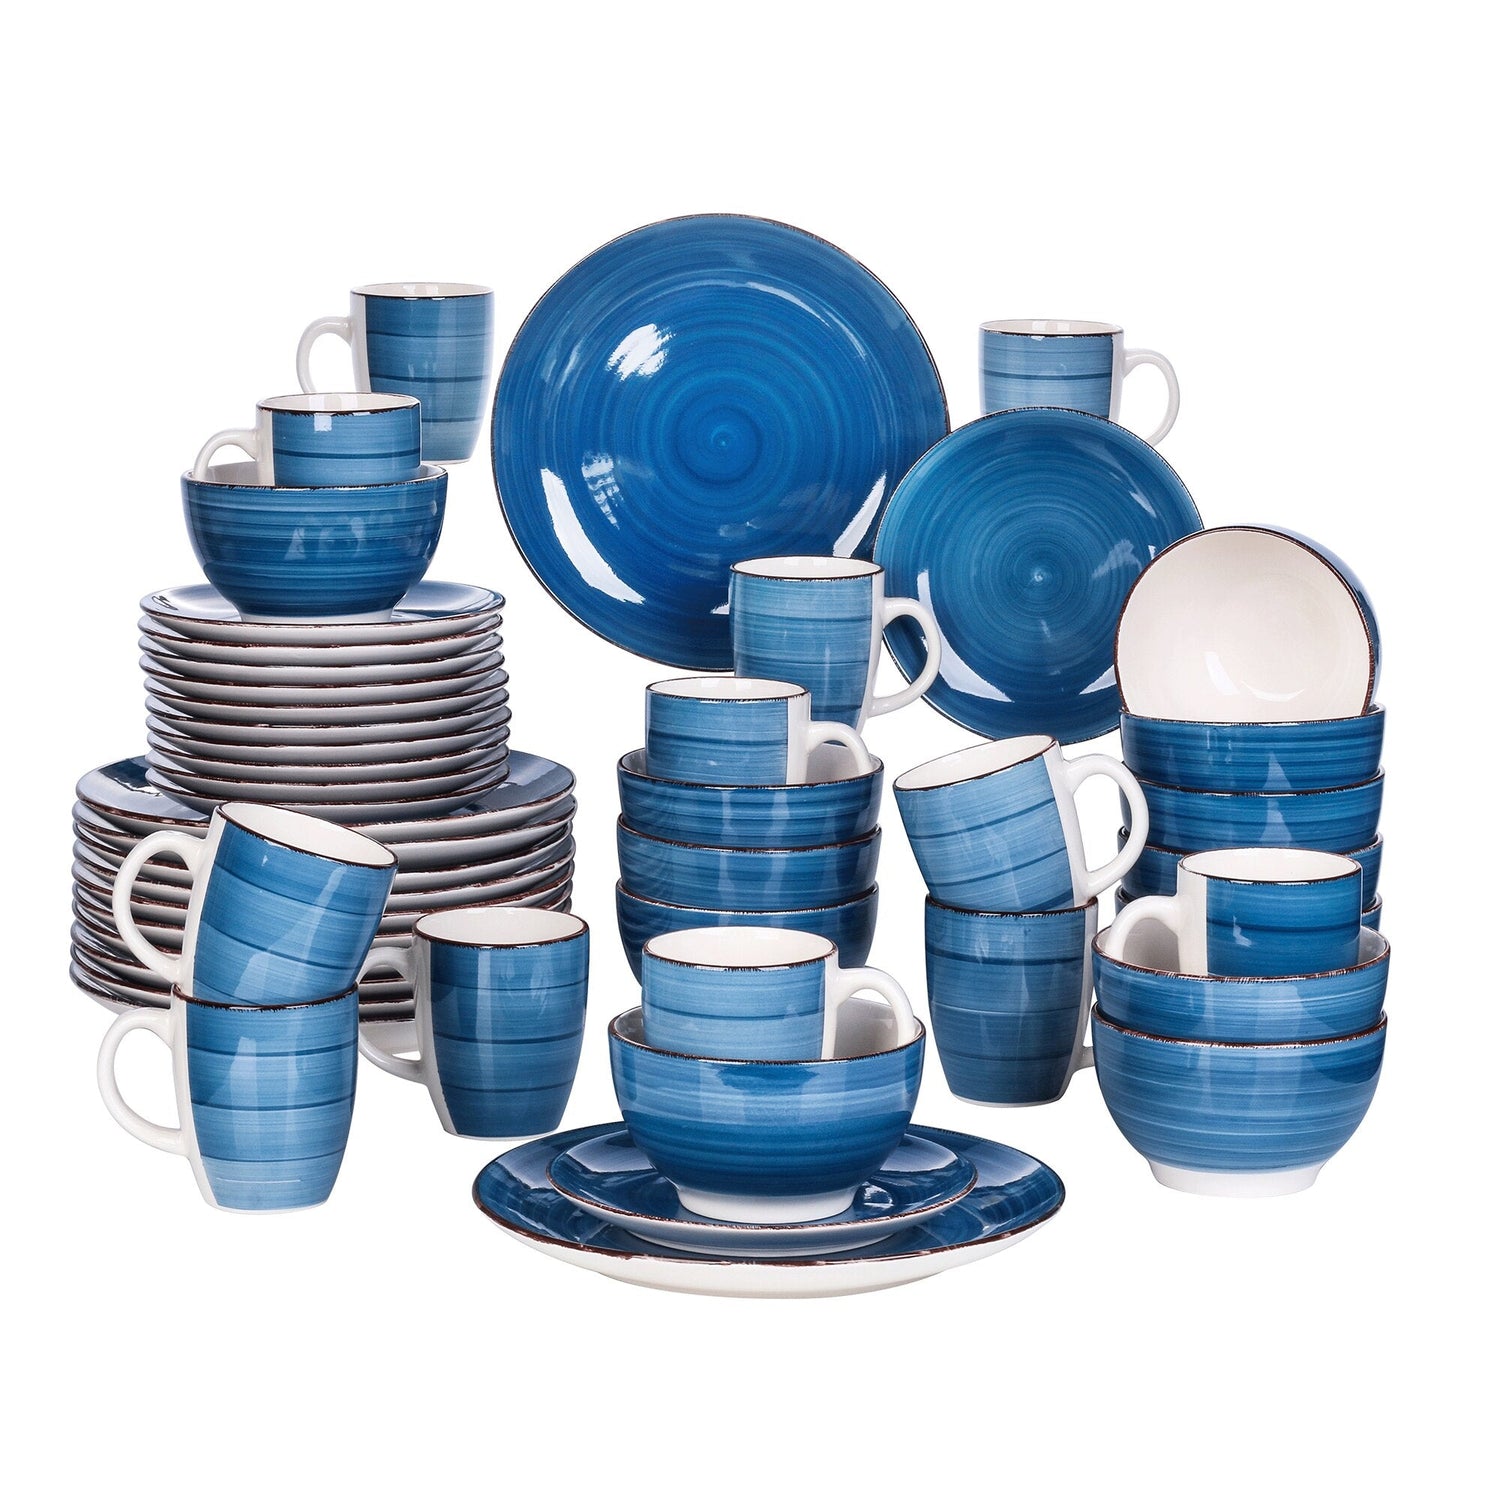 Bella 48-Pieces Porcelain Dinner Set - Nordic Side - 12, 48, Bella, Ceramic, Dinner, Look, Pieces, Plate, PlateBowlMug, PlateDessert, Porcelain, Set, Vancasso, Vintage, with